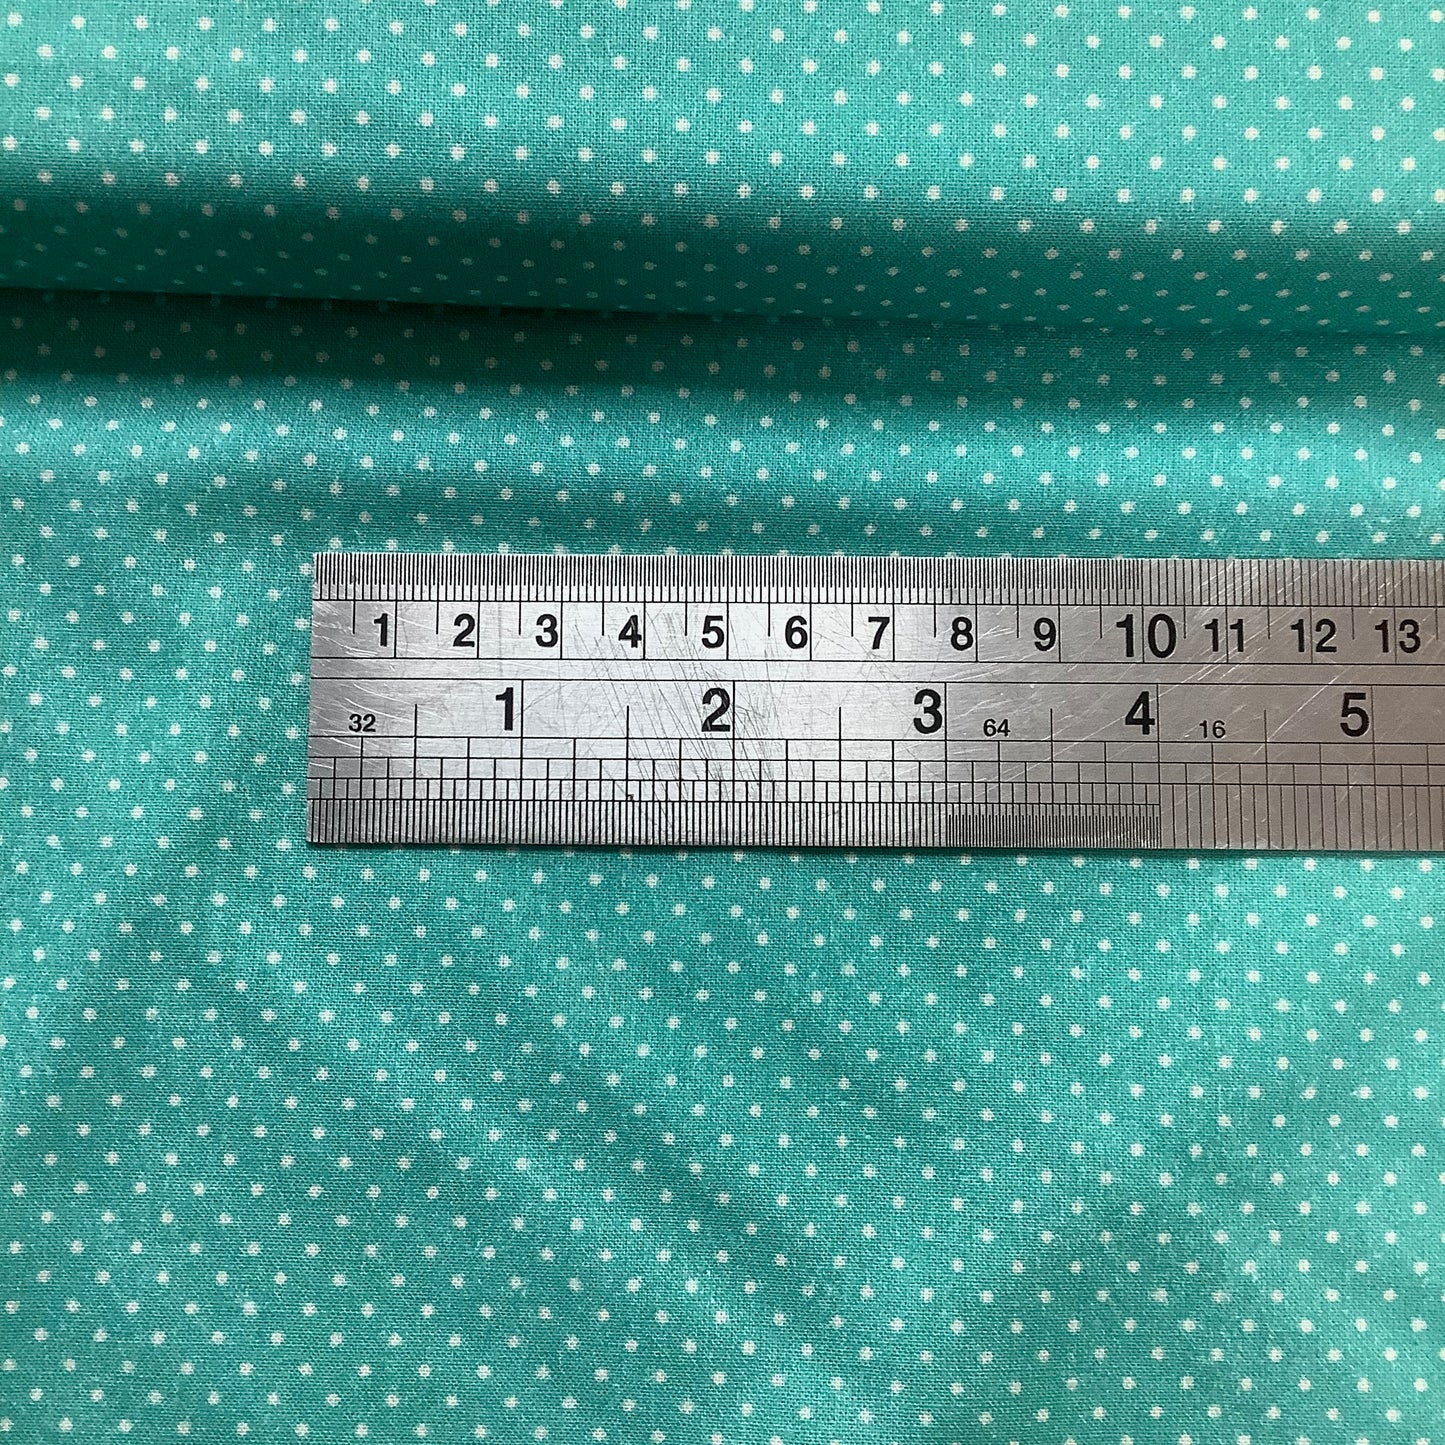 Stoff Le Quilt Printemps 2 Turquoise with White Polka Dot 100% Premium Cotton Fabric